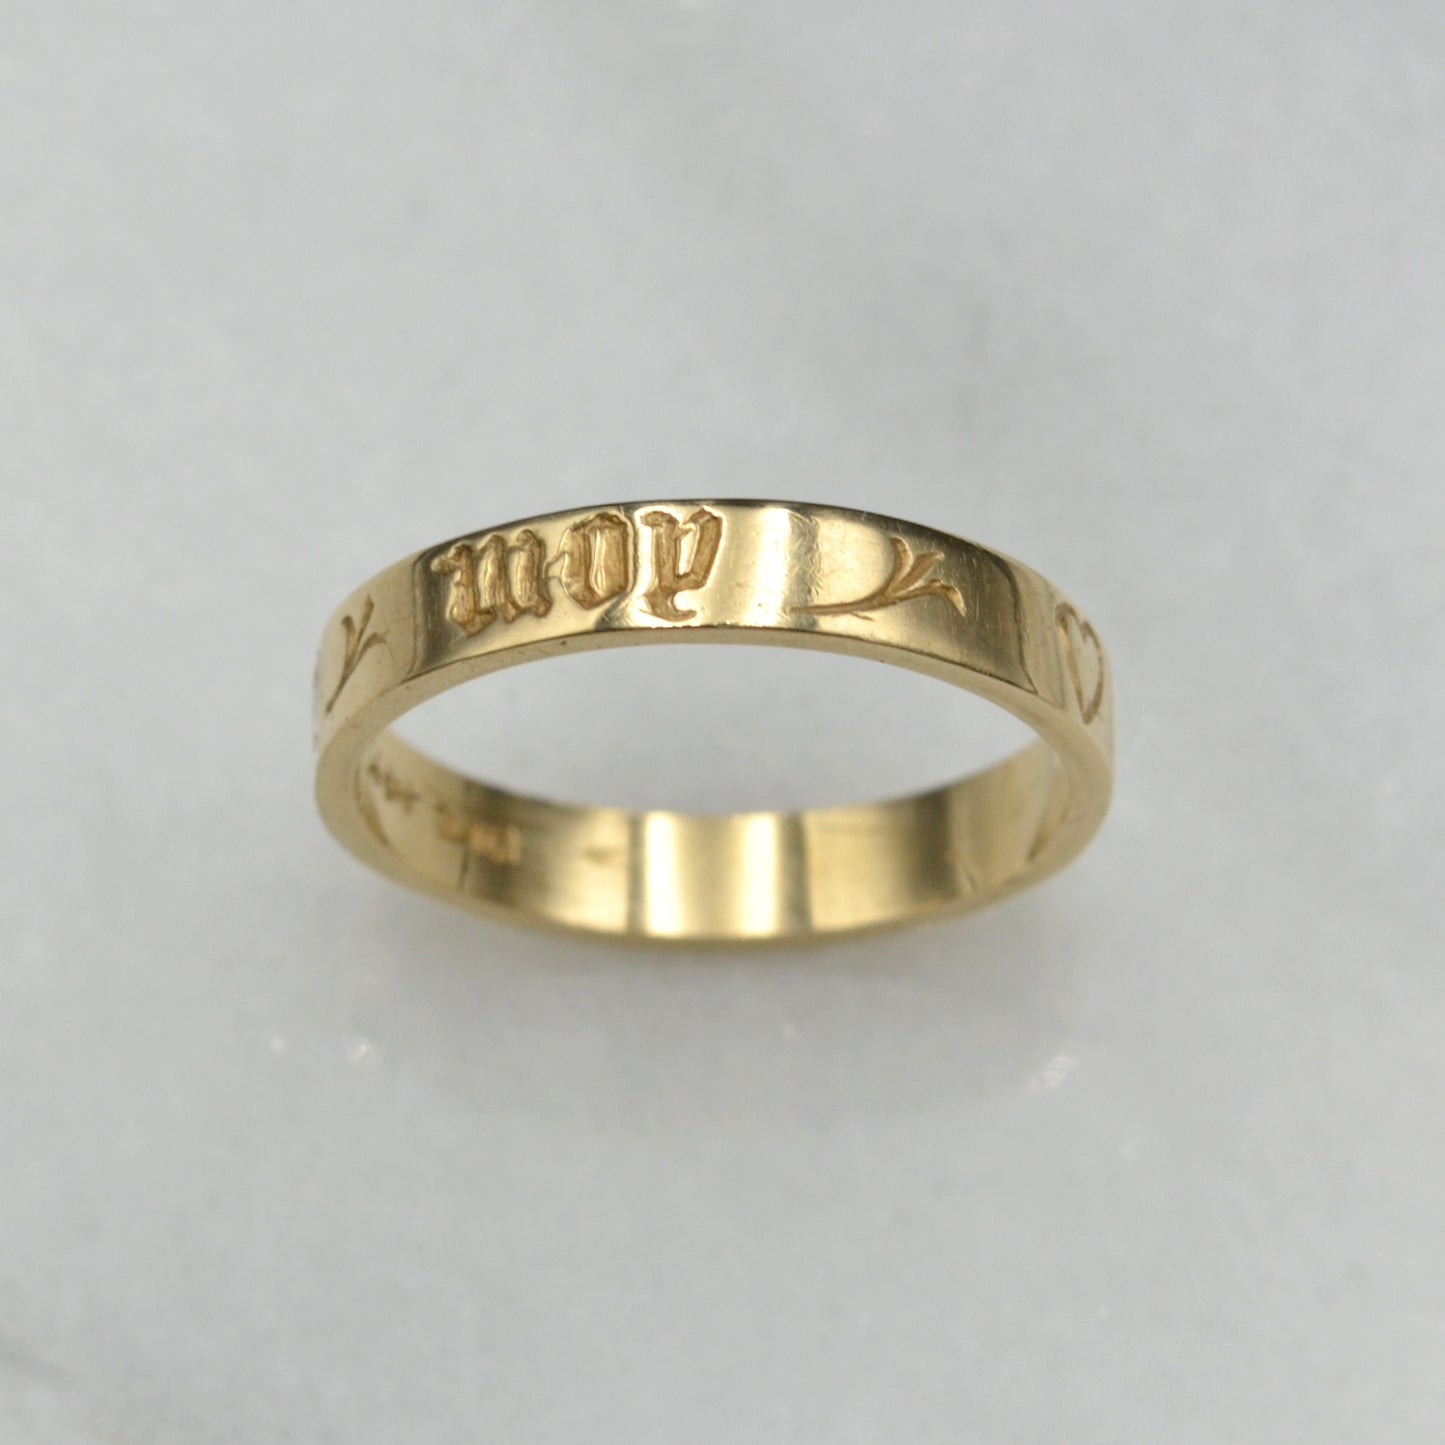 Vintage 14k Gold “Pencez de Moy” Antique Reproduction Posy/Poesy Ring